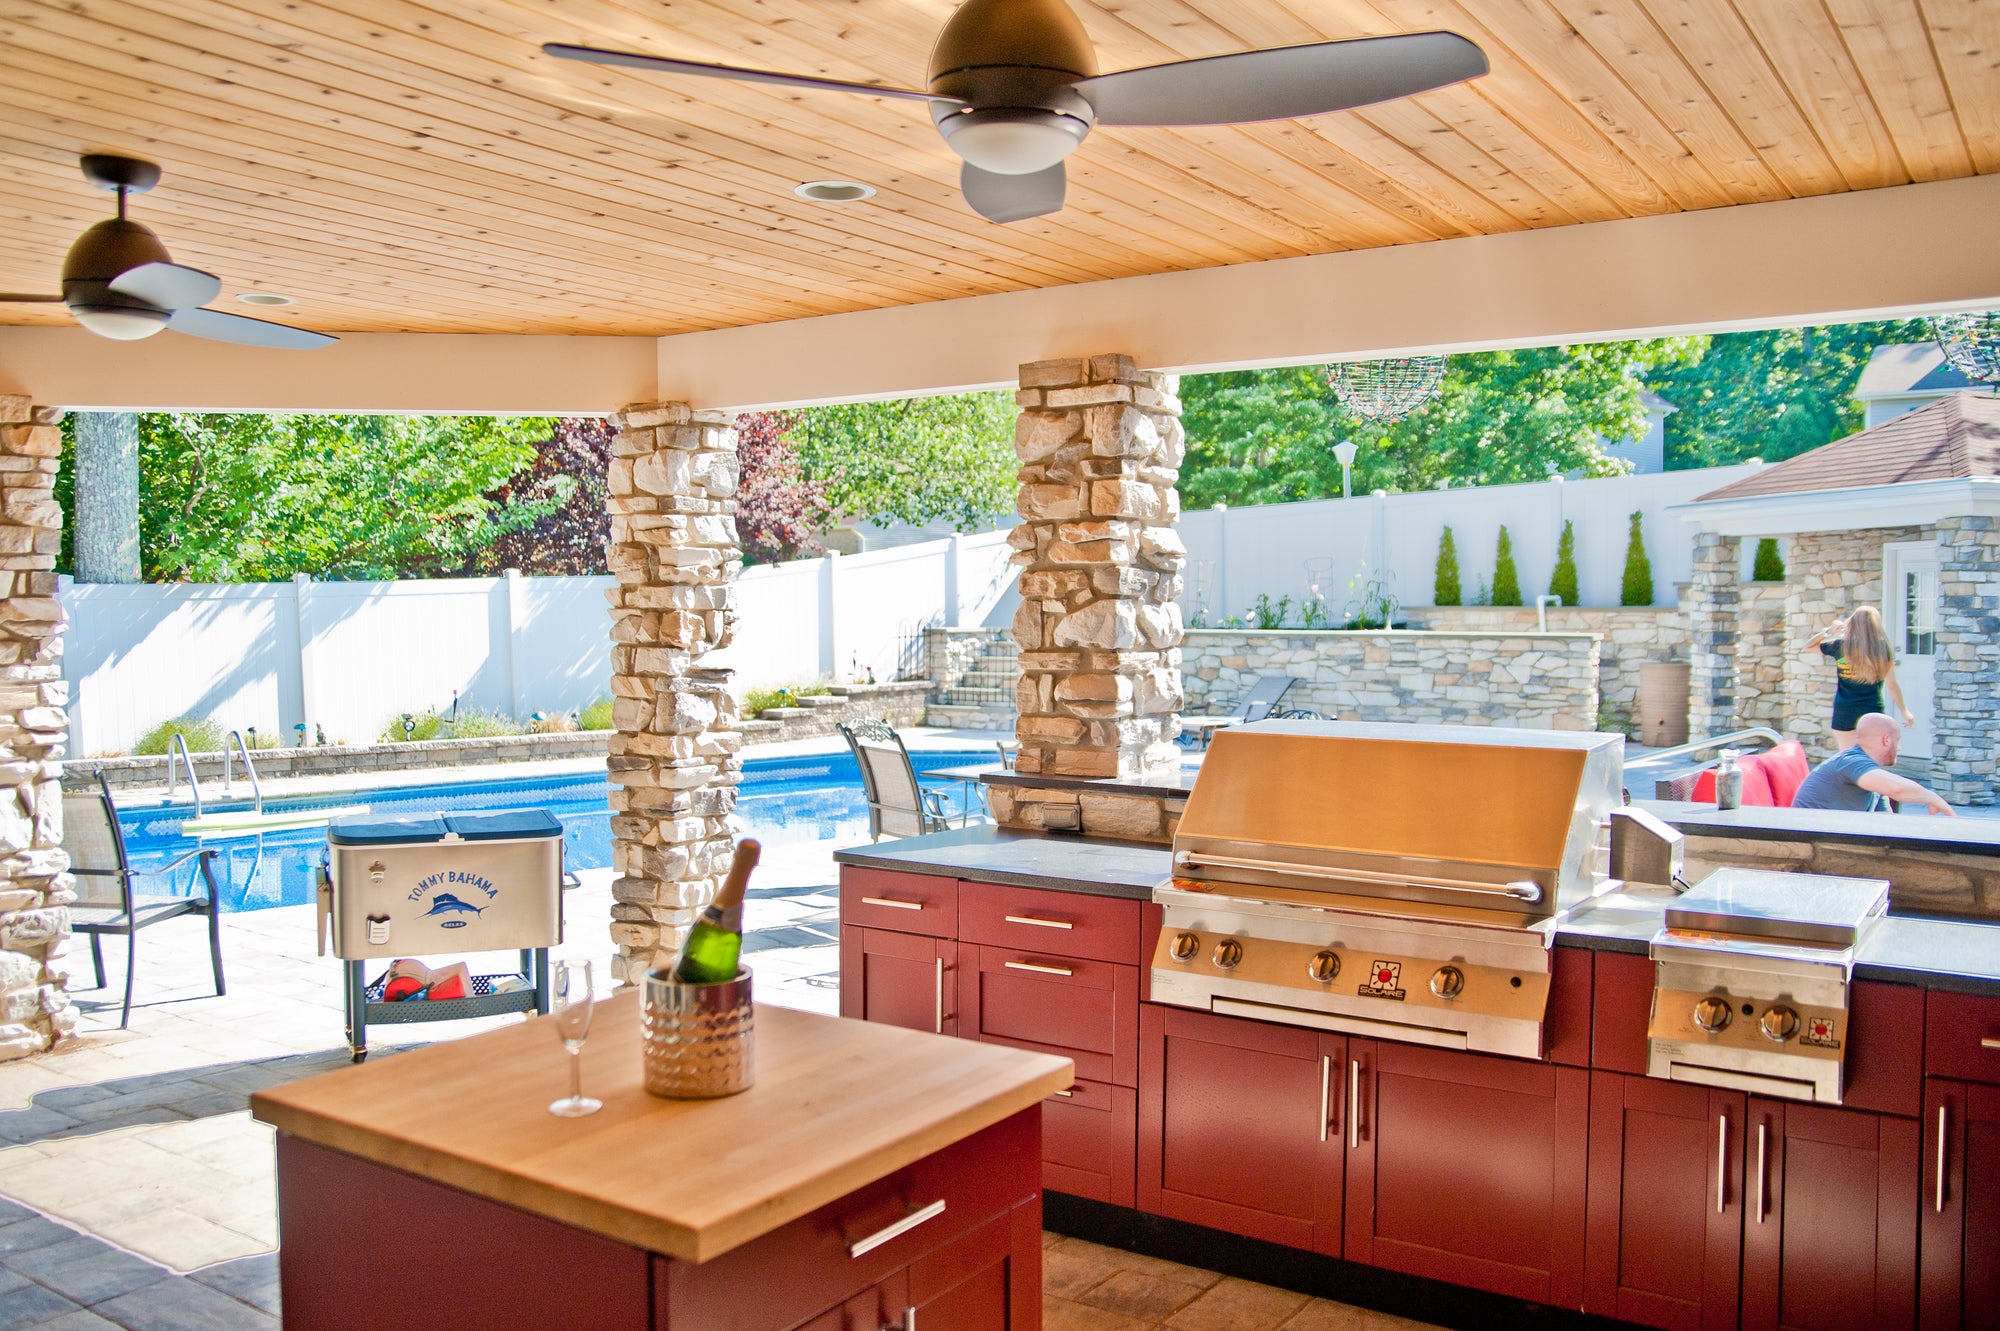 Marine Grade Outdoor Kitchens, Furniture, Riviera Outdoor Decor, Corpus Christi, Texas 78414